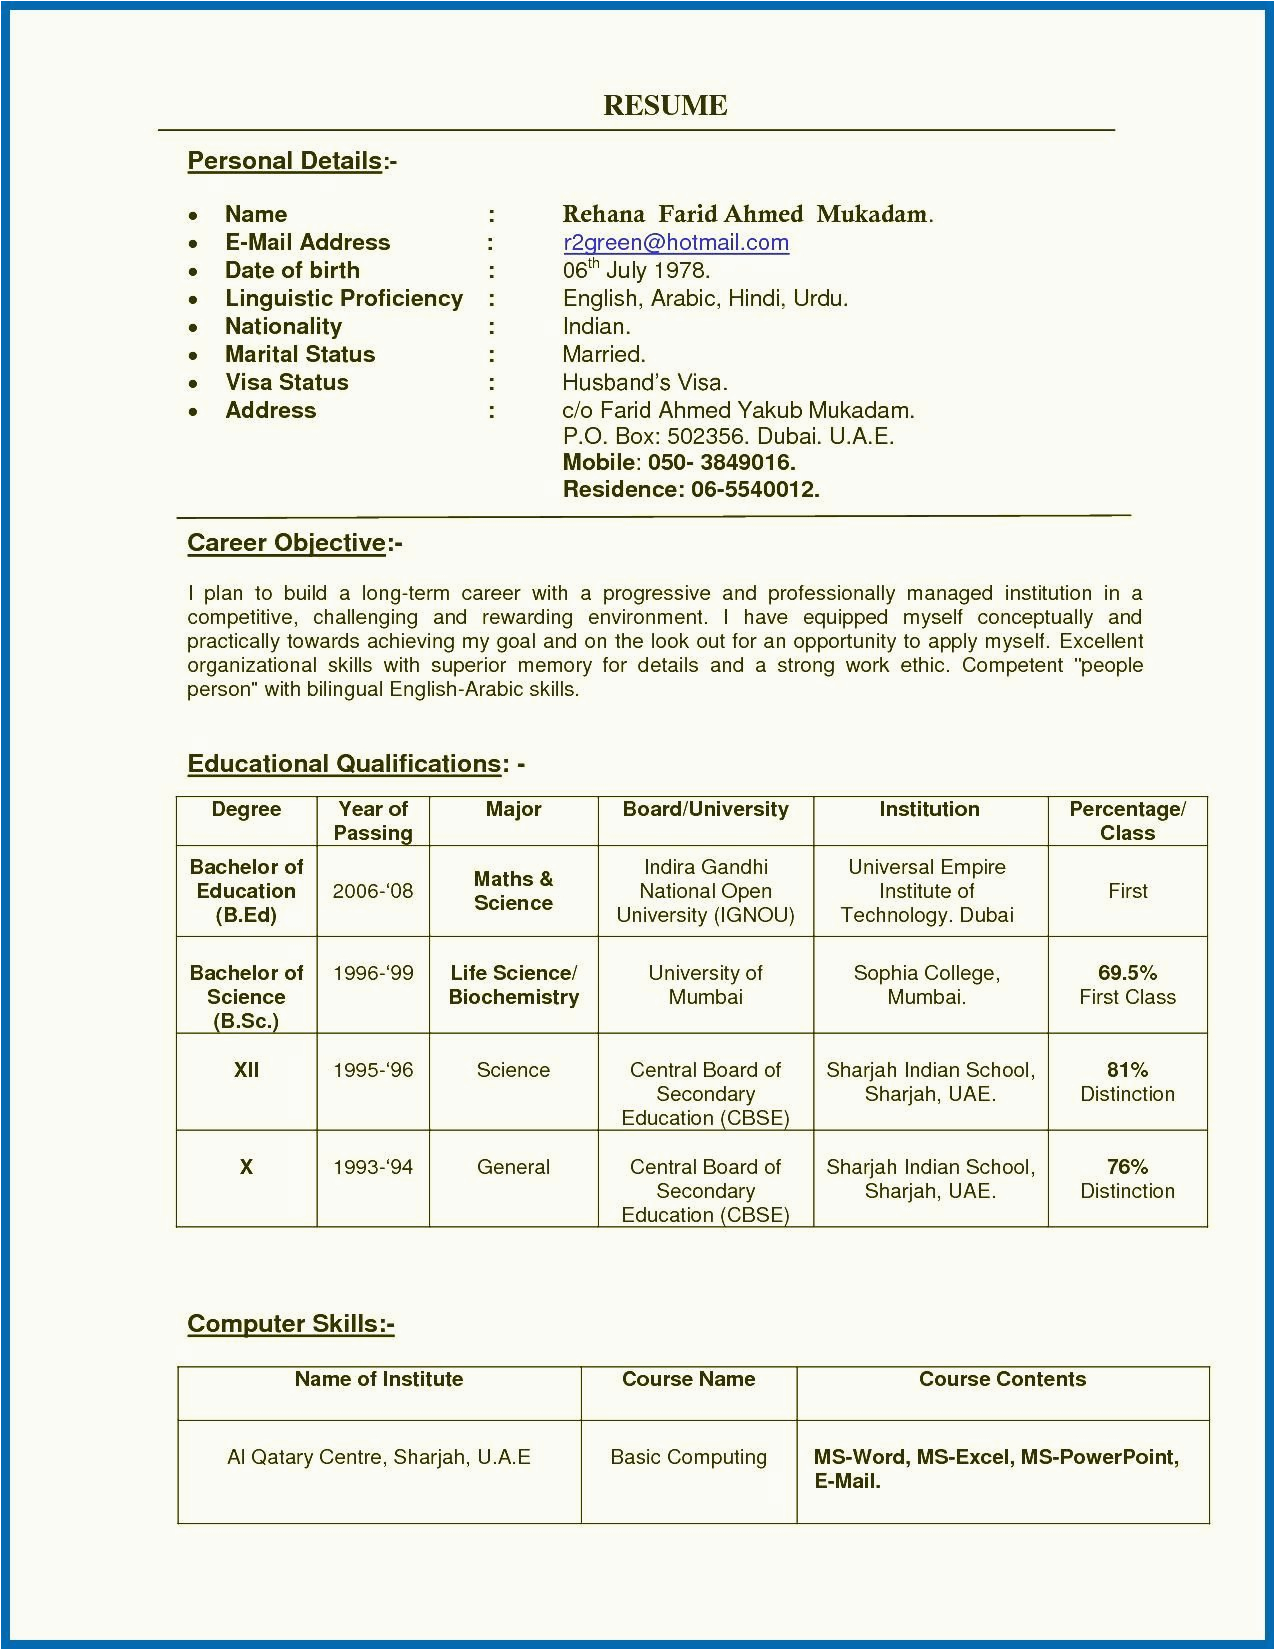 Sample Resume for Teaching Position In India Resume Of A Teacher India Teachers Resume format India Professor Resume